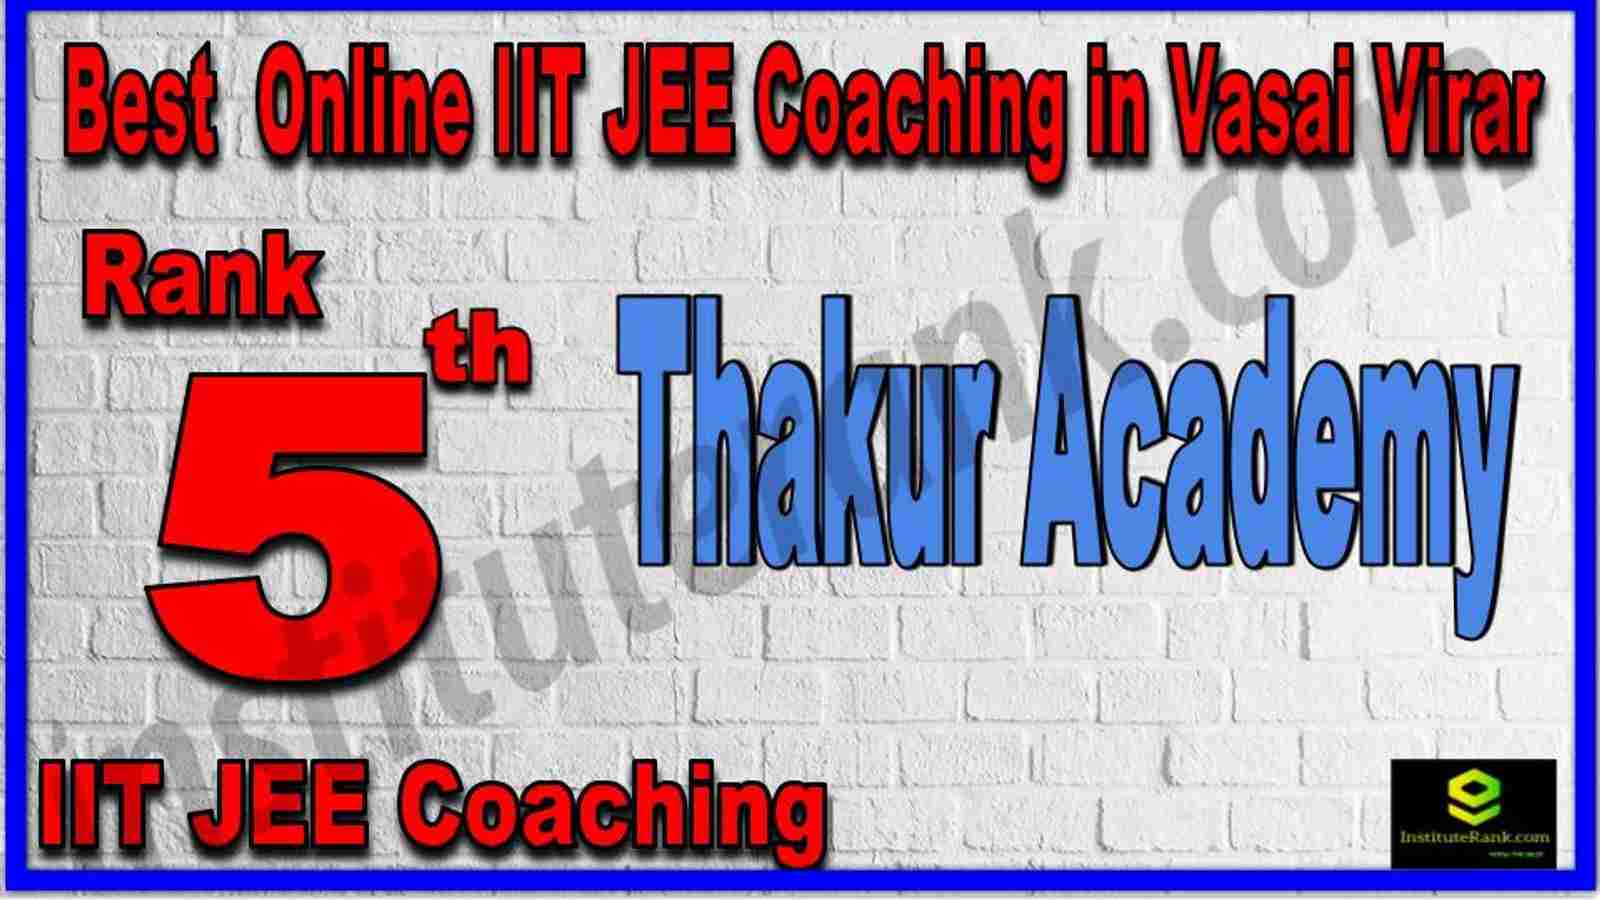 Rank 5th Best Online IIT JEE Coaching in Vasai Virar